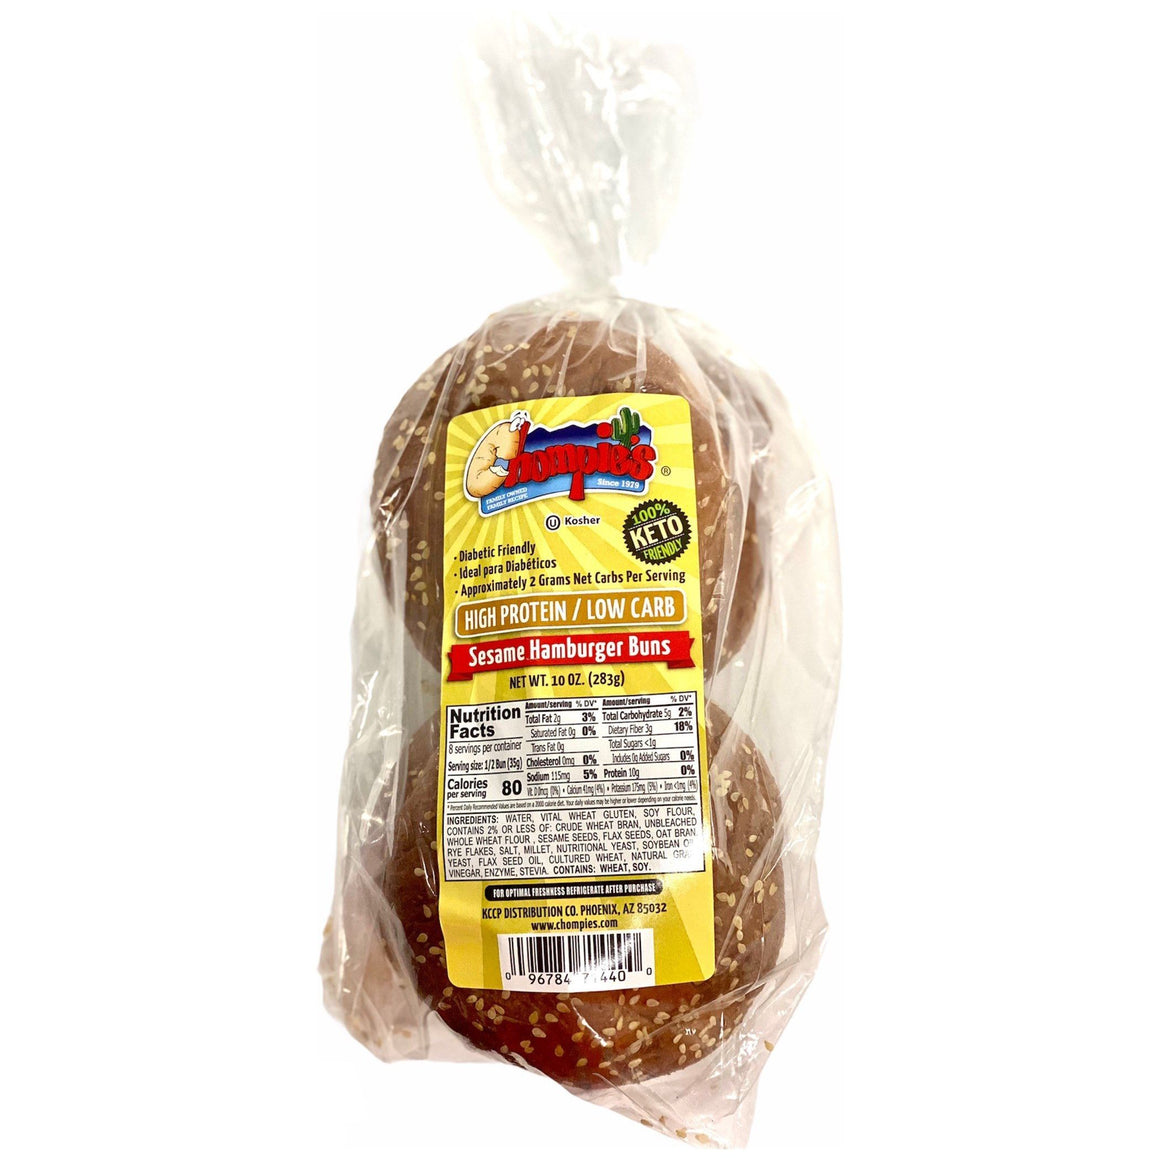 Chompies - Low Carb High Protein Sesame Hamburger buns- 10 oz Bag